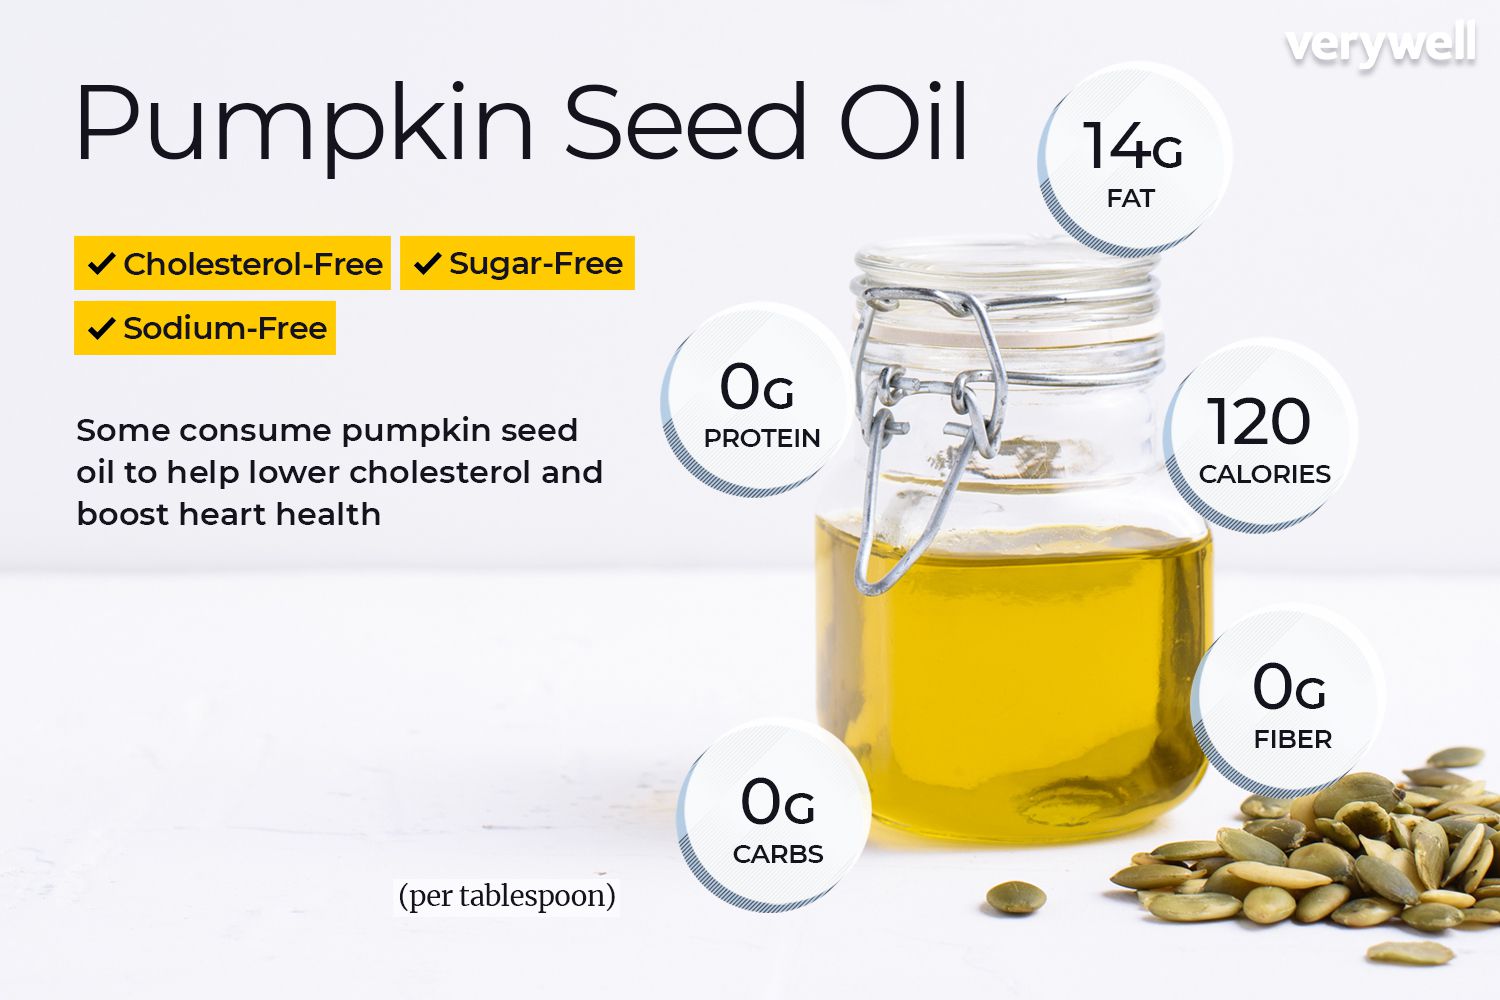 Pumpkin seed oil, annotated